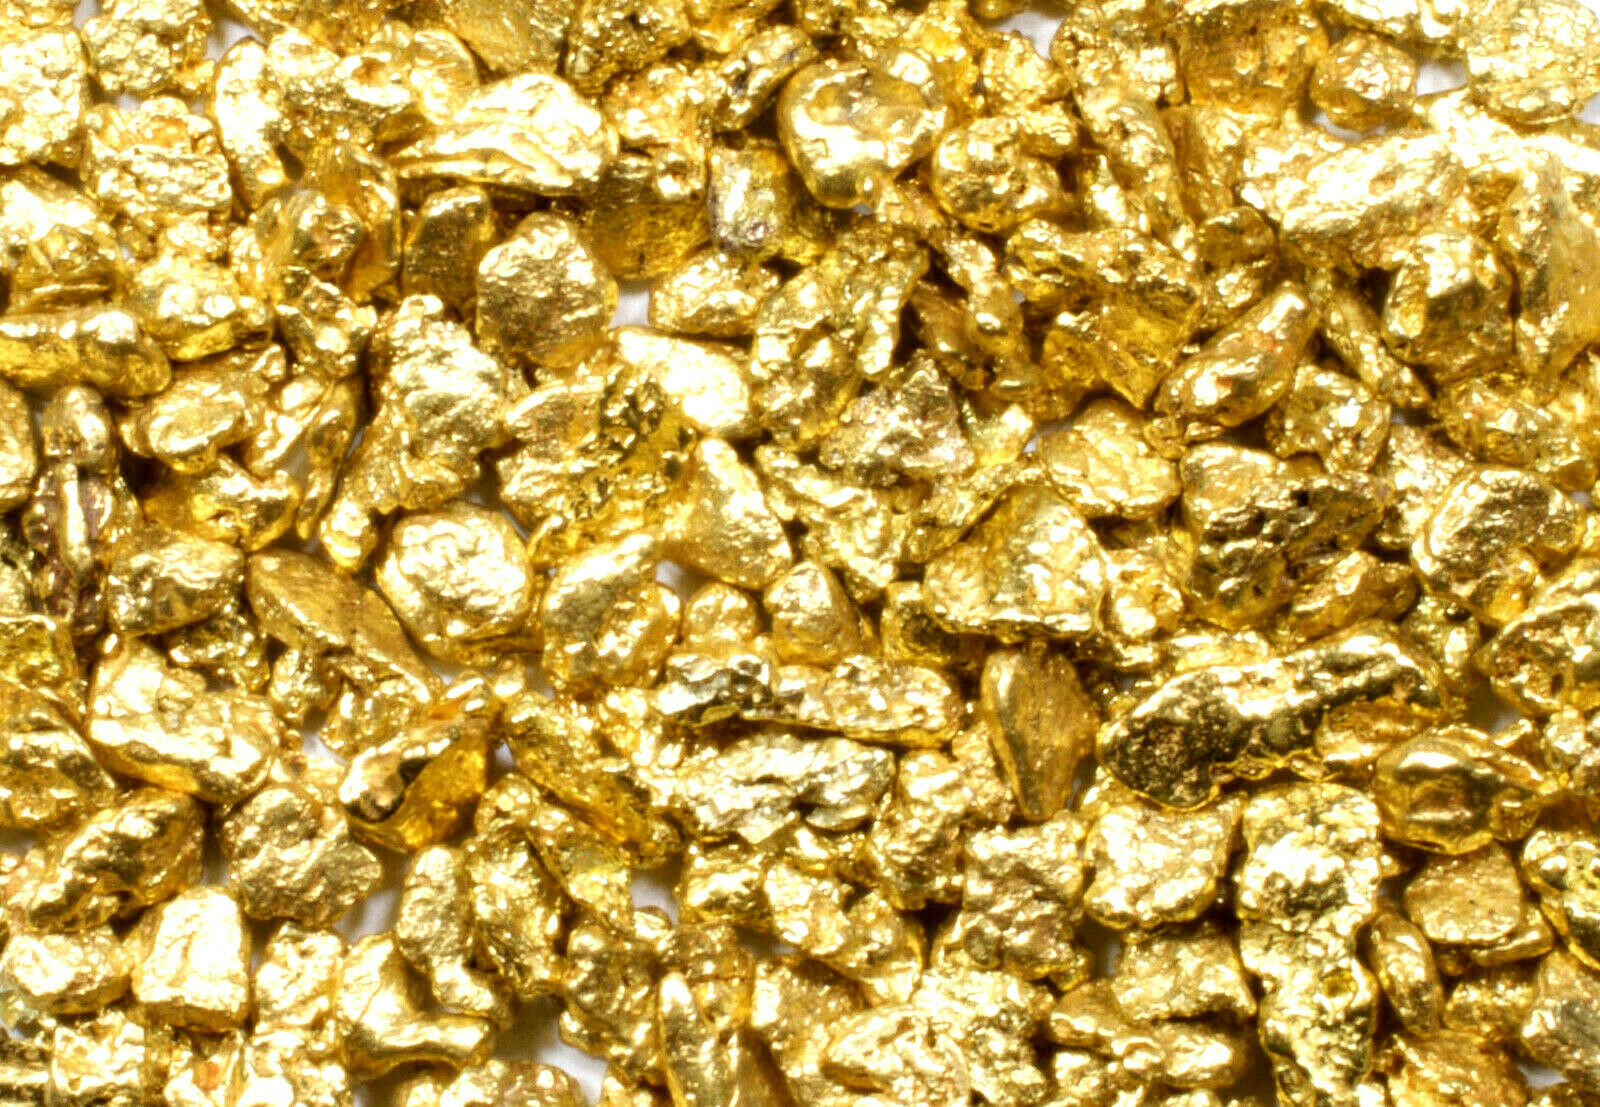 0.250 GRAMS ALASKAN YUKON BC NATURAL PURE GOLD NUGGETS #8 MESH - Liquidbullion